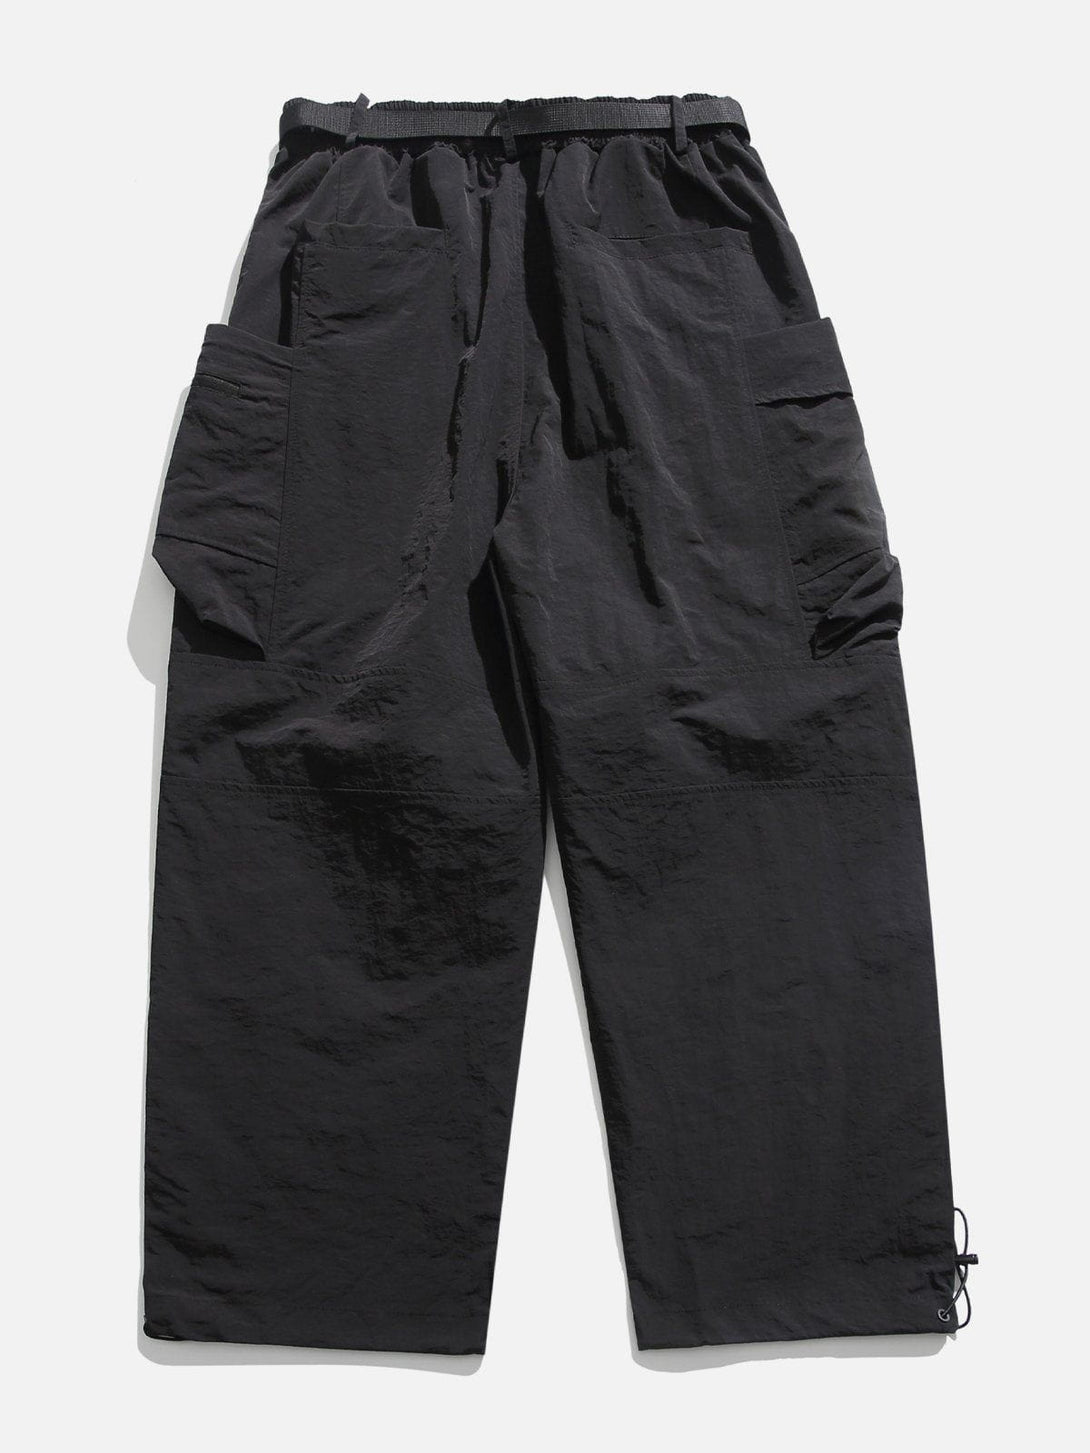 Levefly - Large Pockets Pleated Cargo Pants - Streetwear Fashion - levefly.com